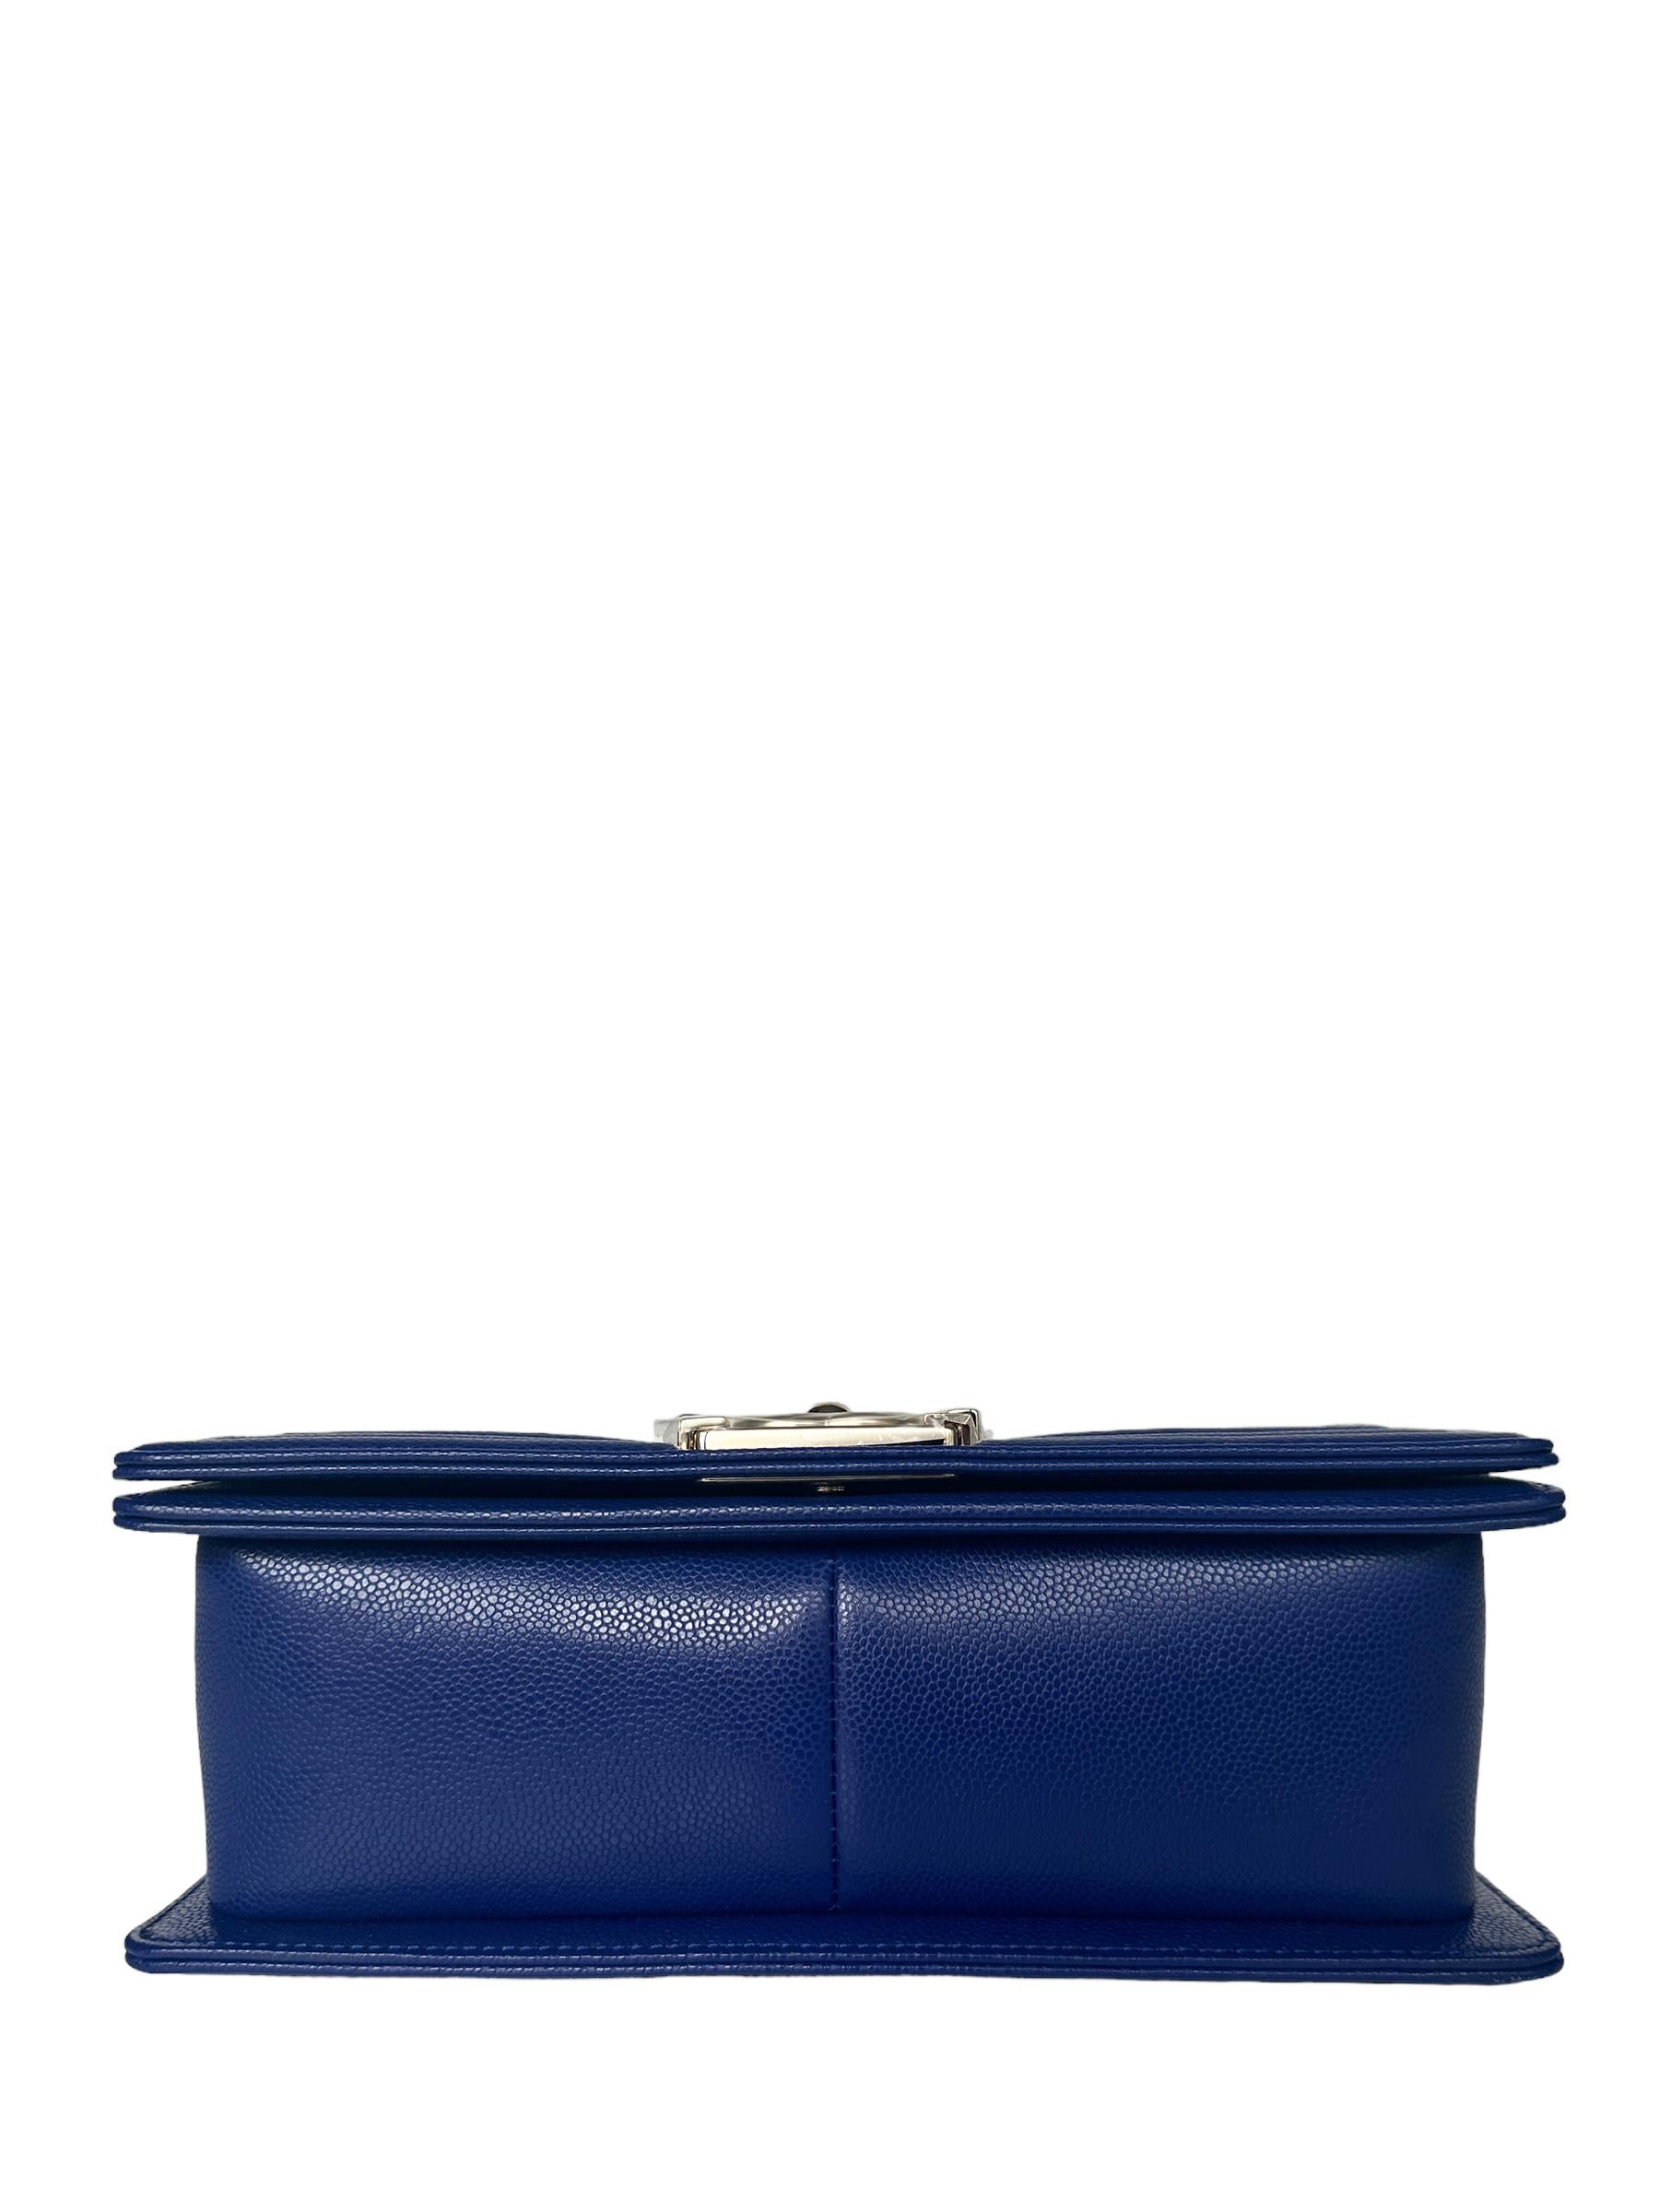 Women's Chanel NEW Cobalt Blue Caviar Leather Quilted Medium Boy Bag